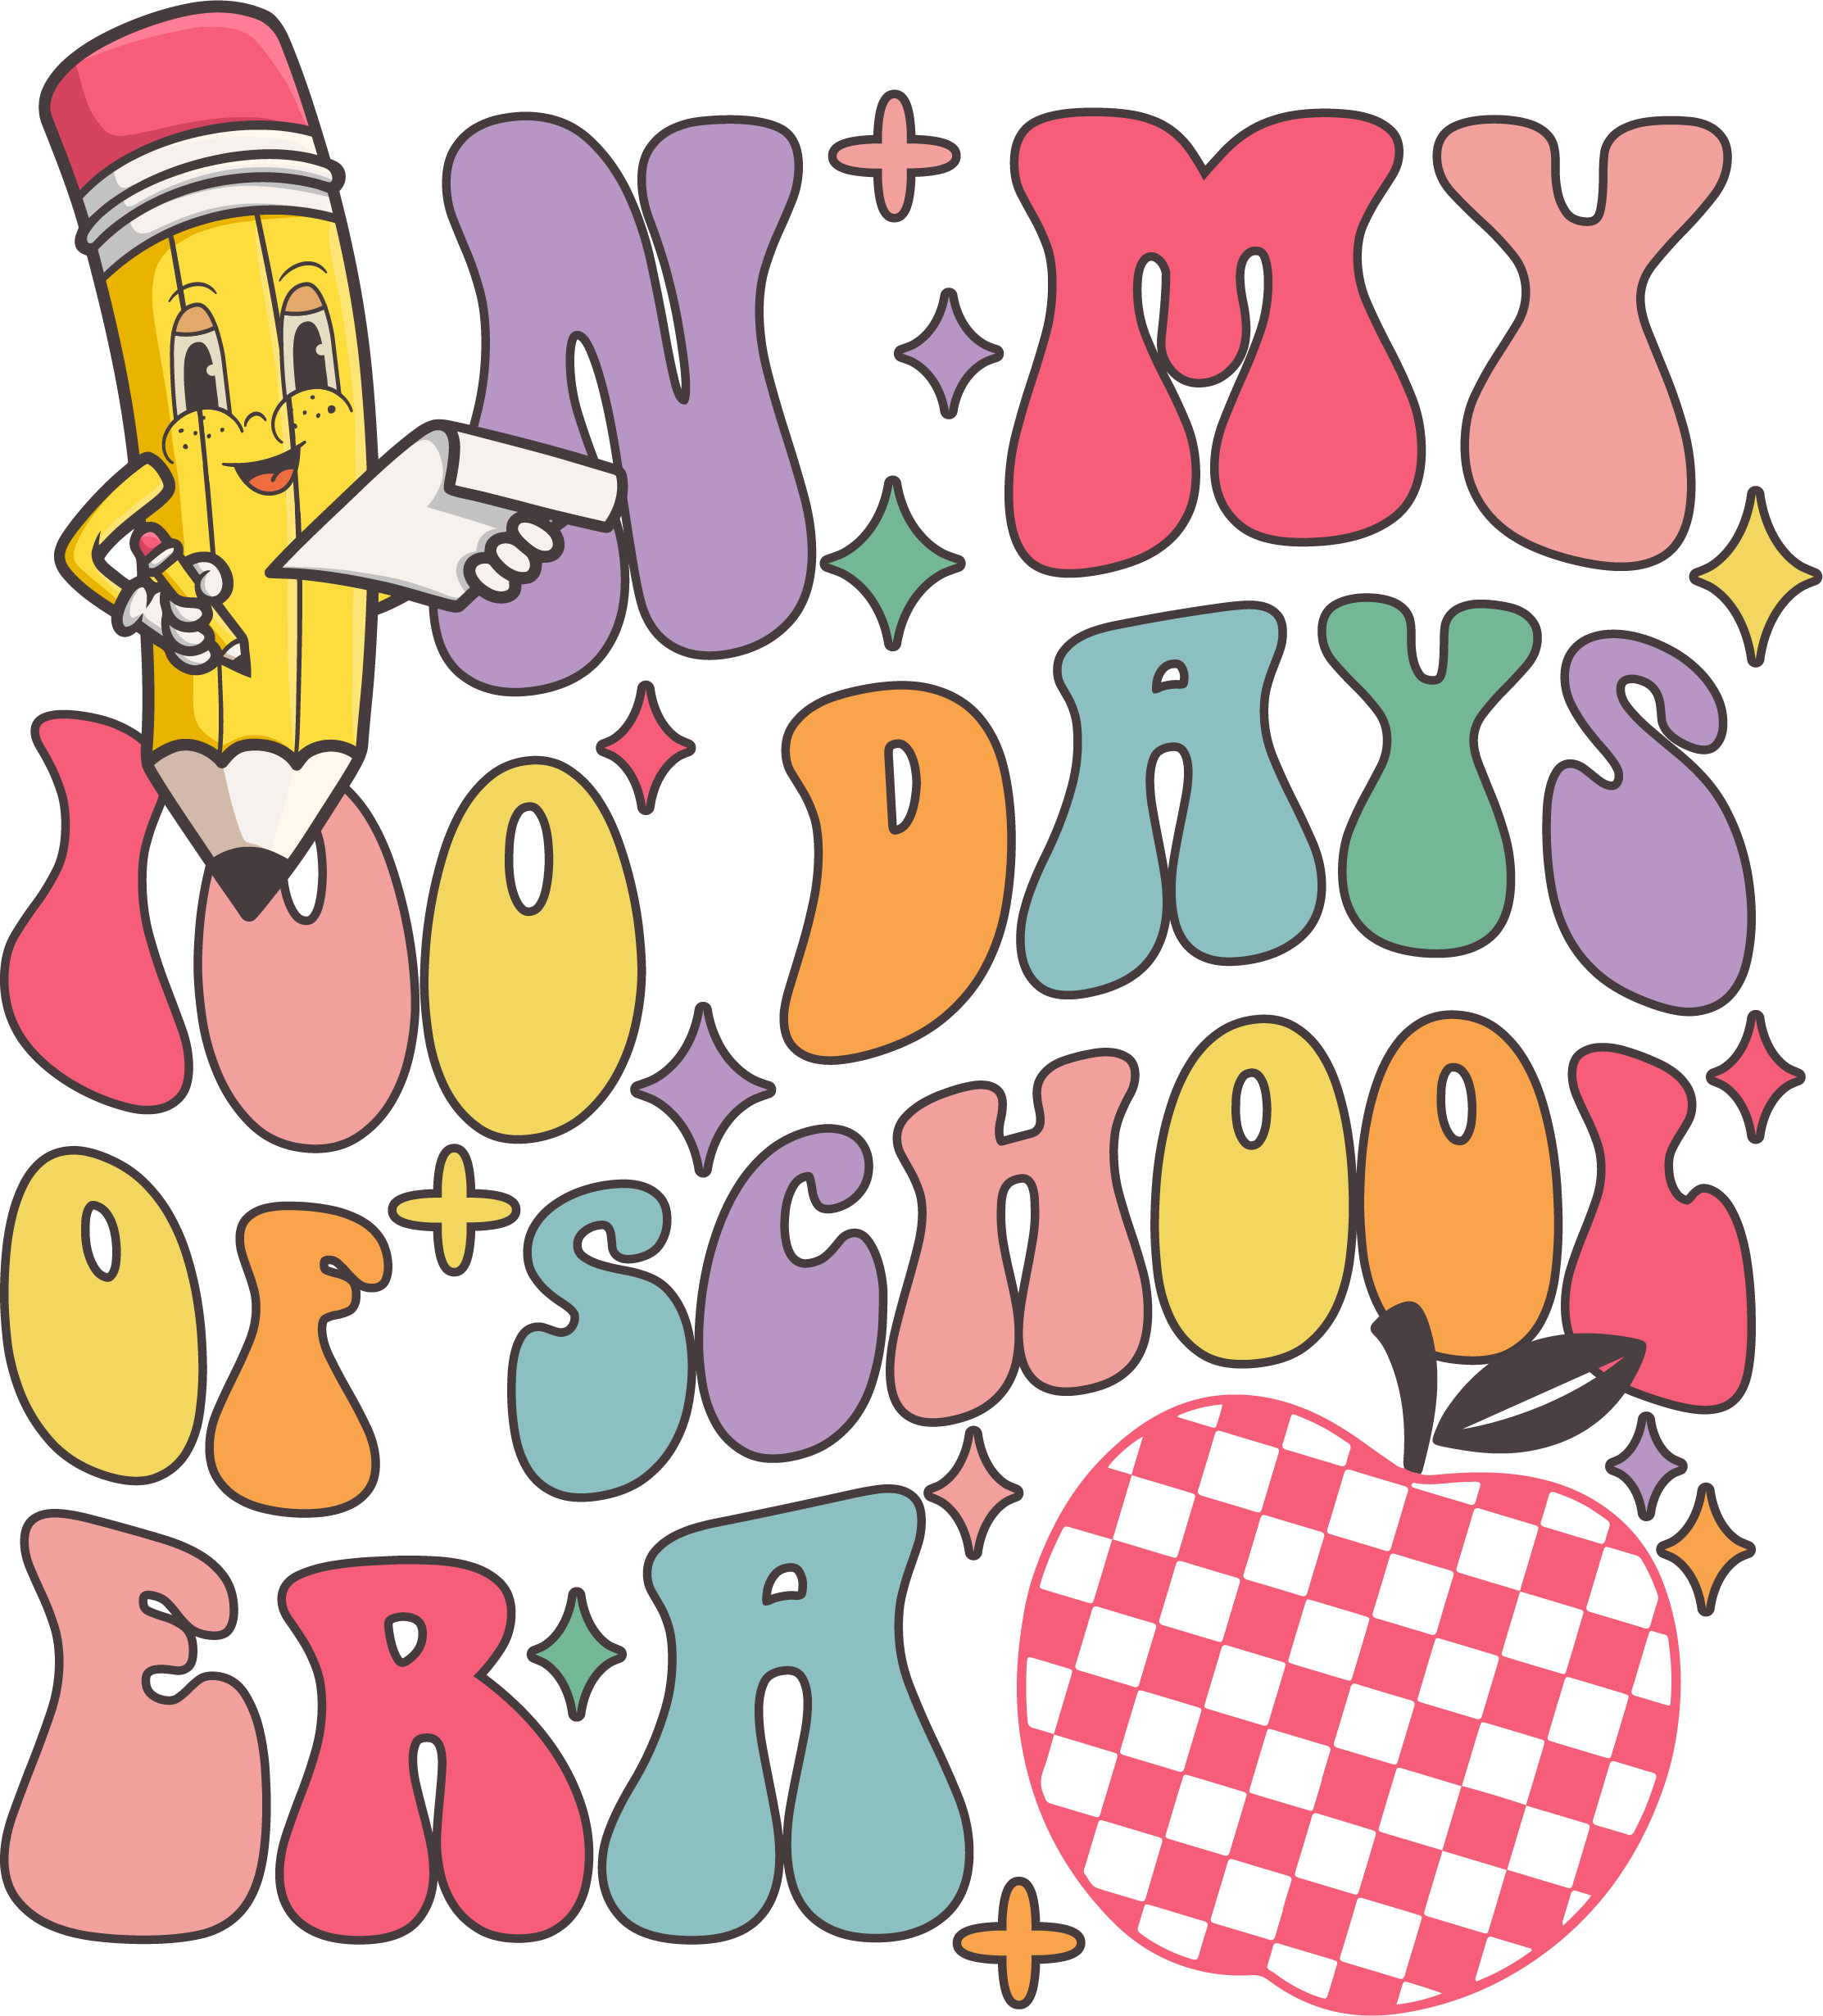 Copy of 100 days of school- peace sign Scorpio 65 Designs